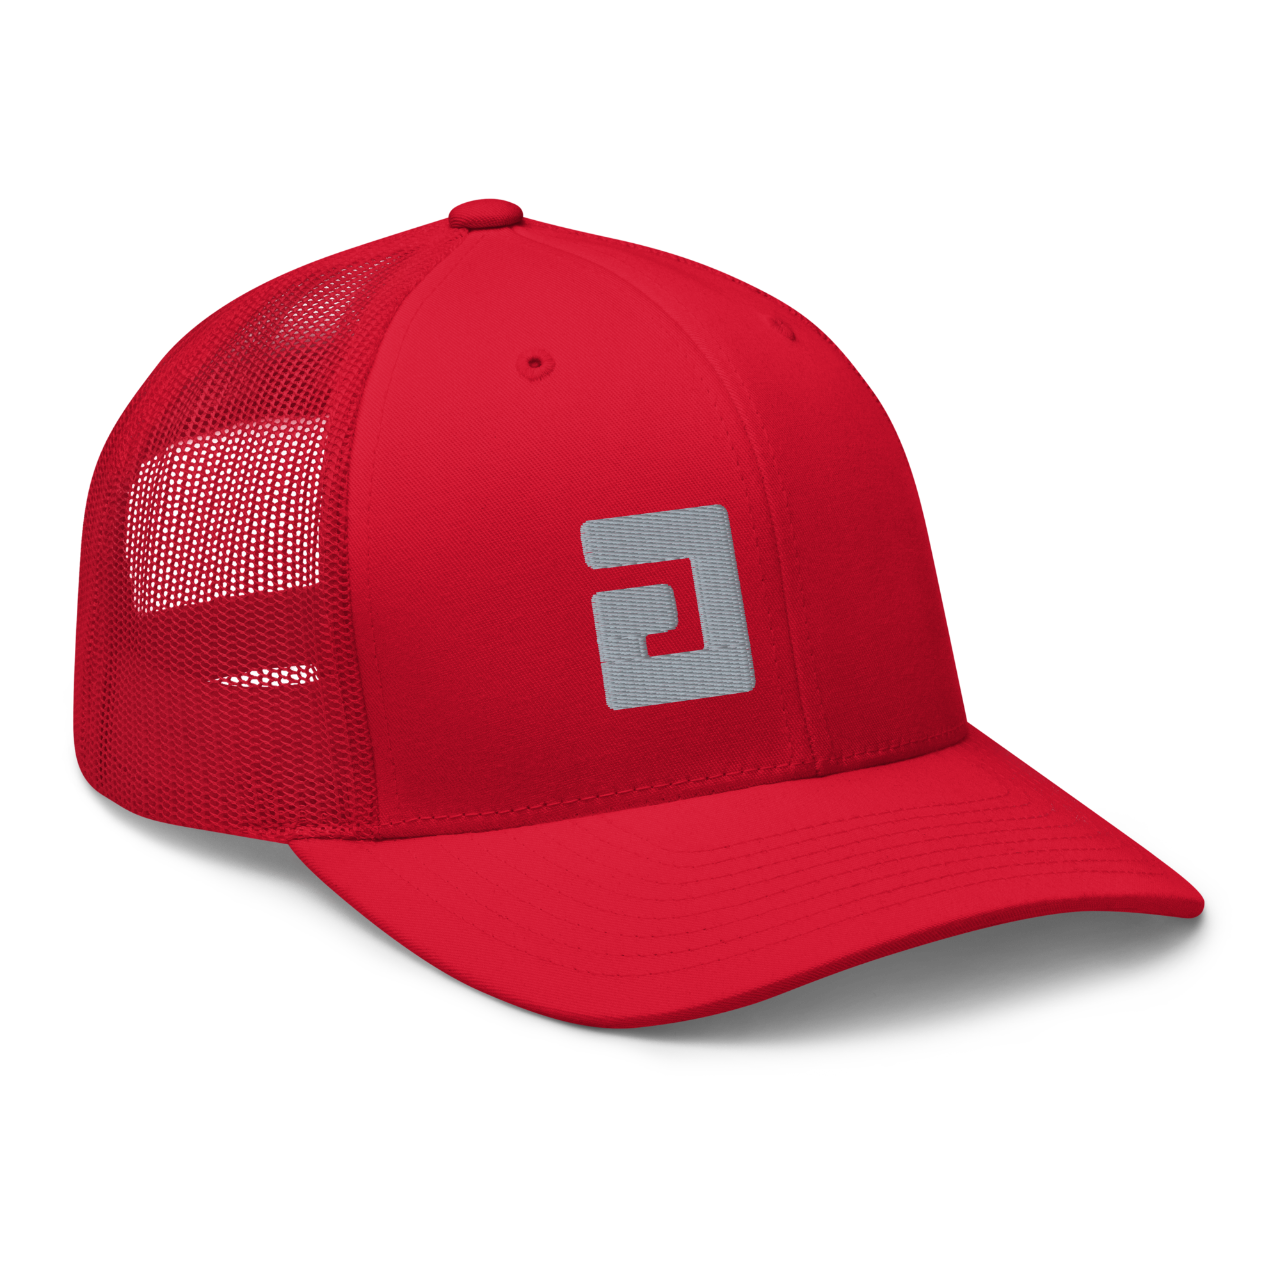 axsgtr axess electronics guitar music industry branded merchandise swag trucker cap hat red grey